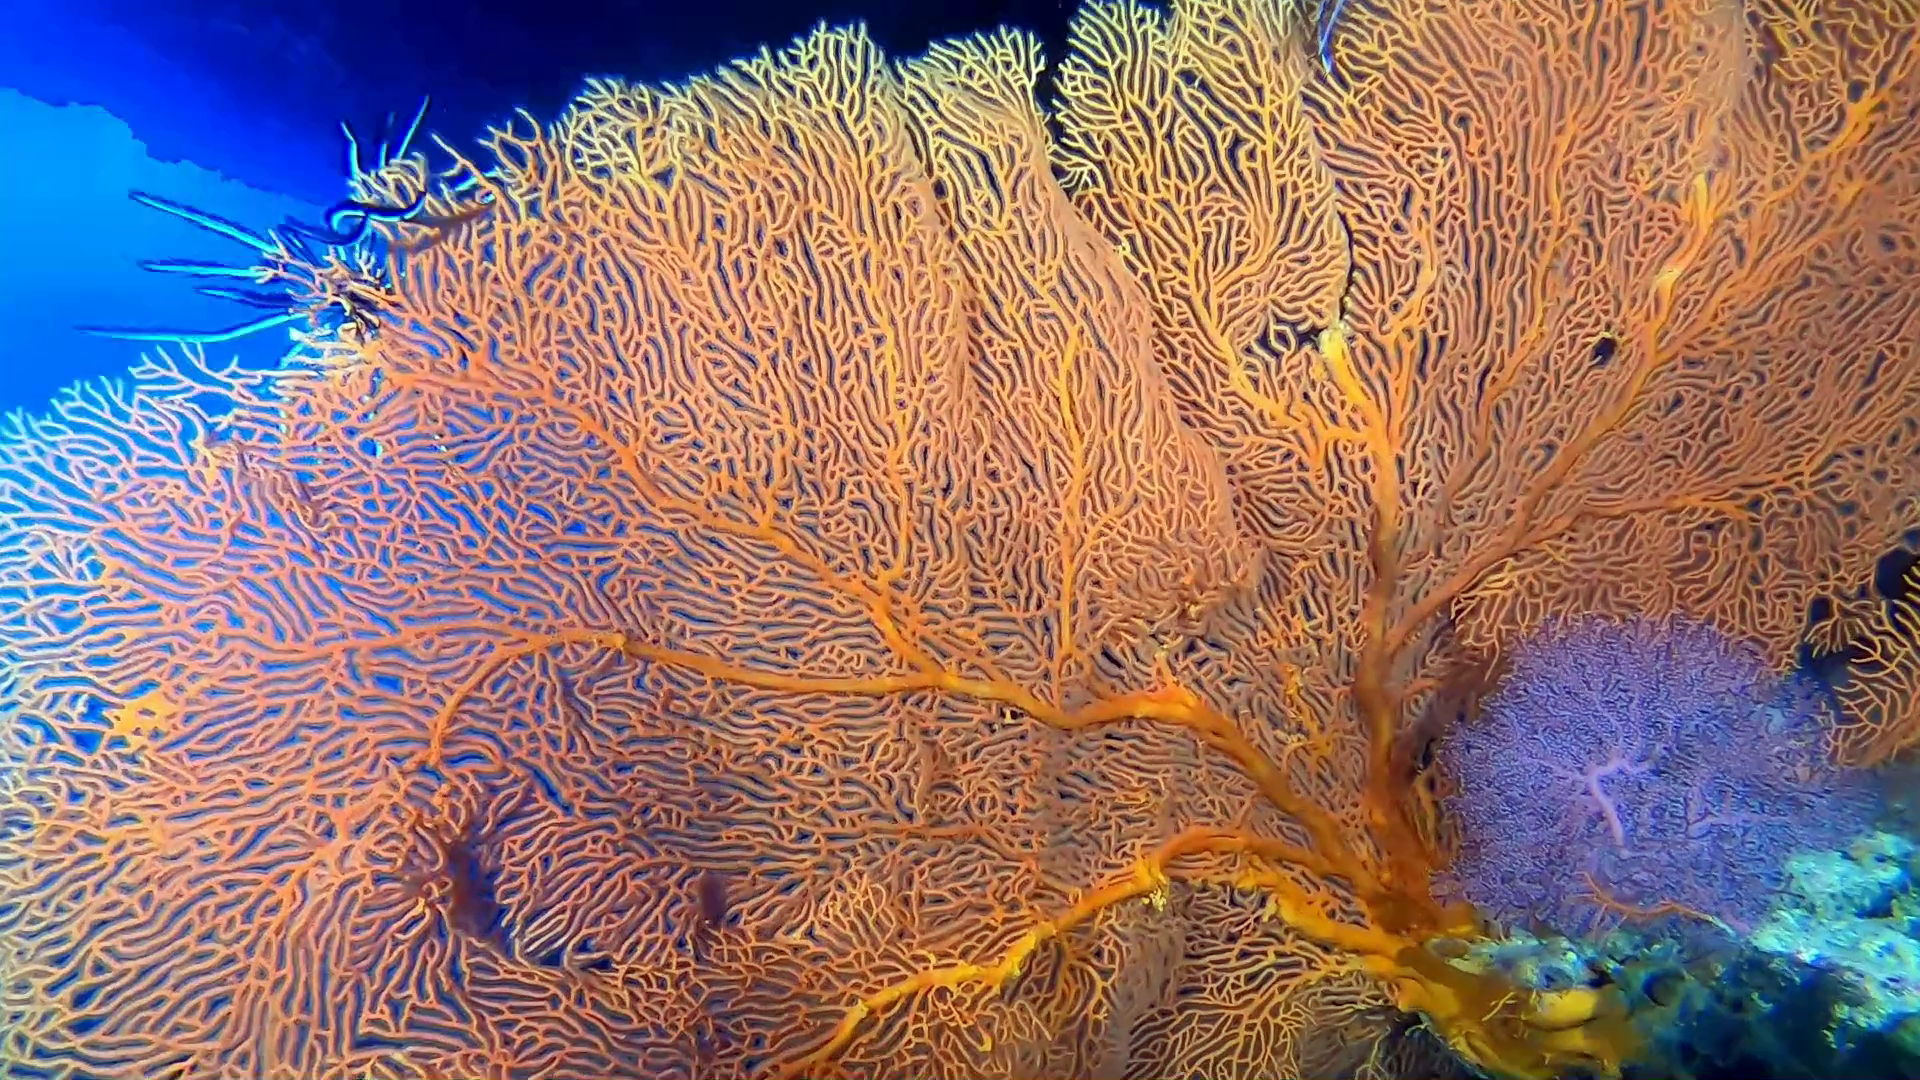 Sea Whip coral - Subergorgia hiksoni